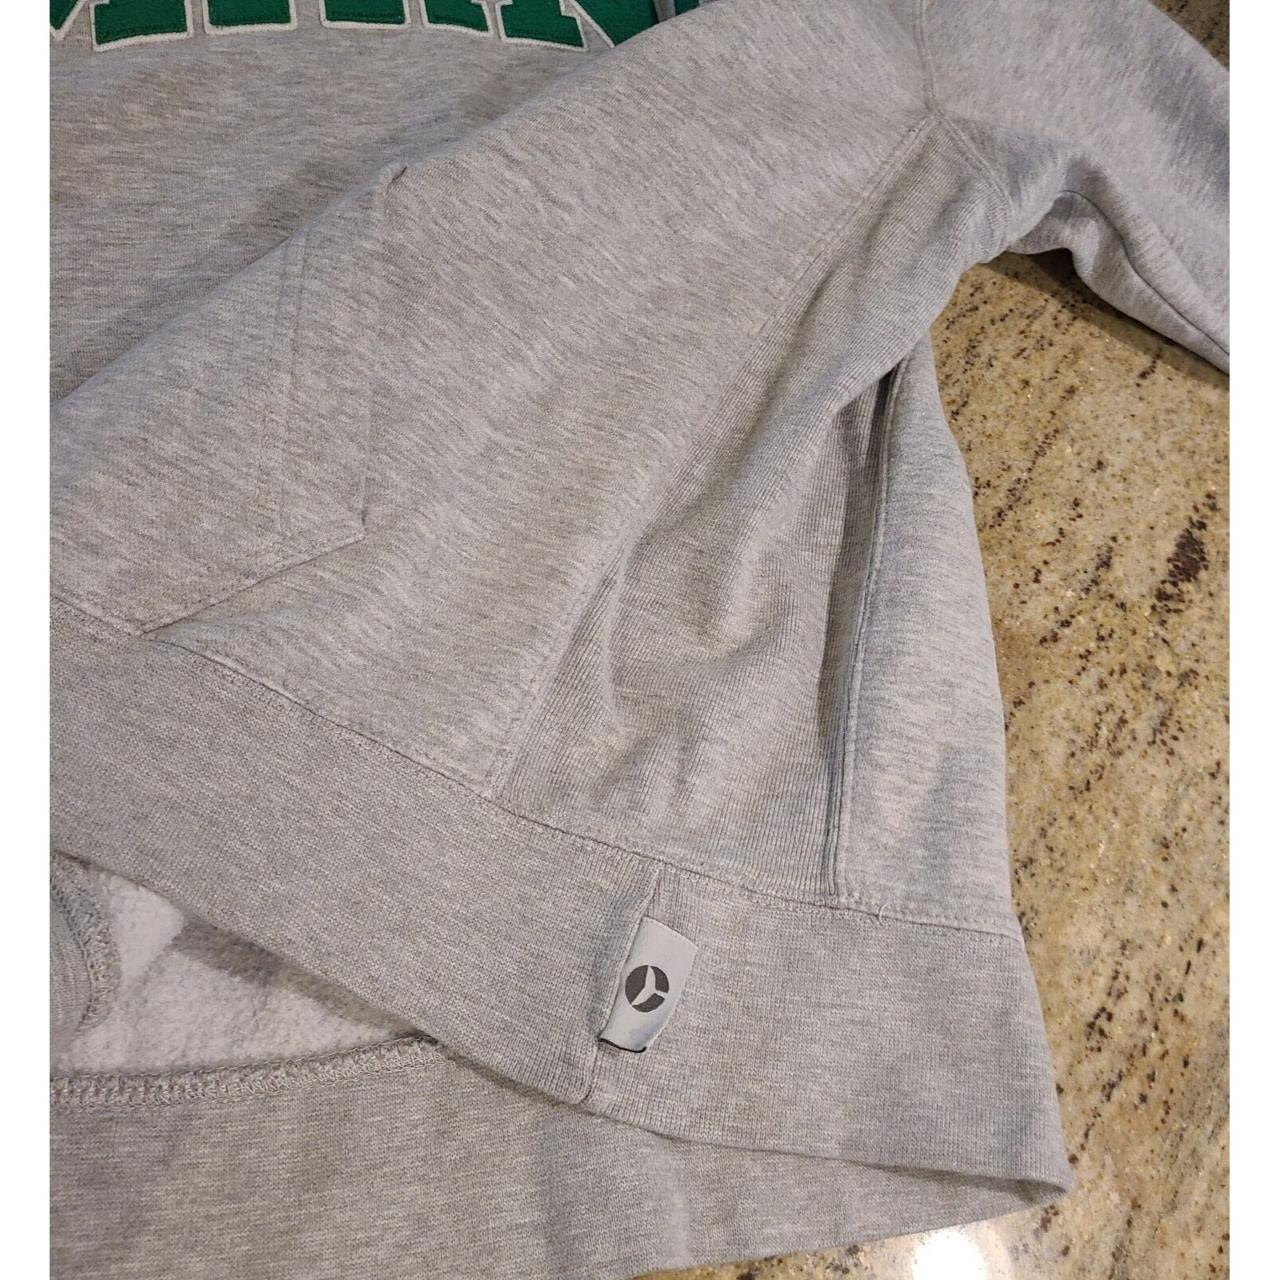 Size XL MAINE Hoodie Pullover Sweatshirt Gray Green... - Depop